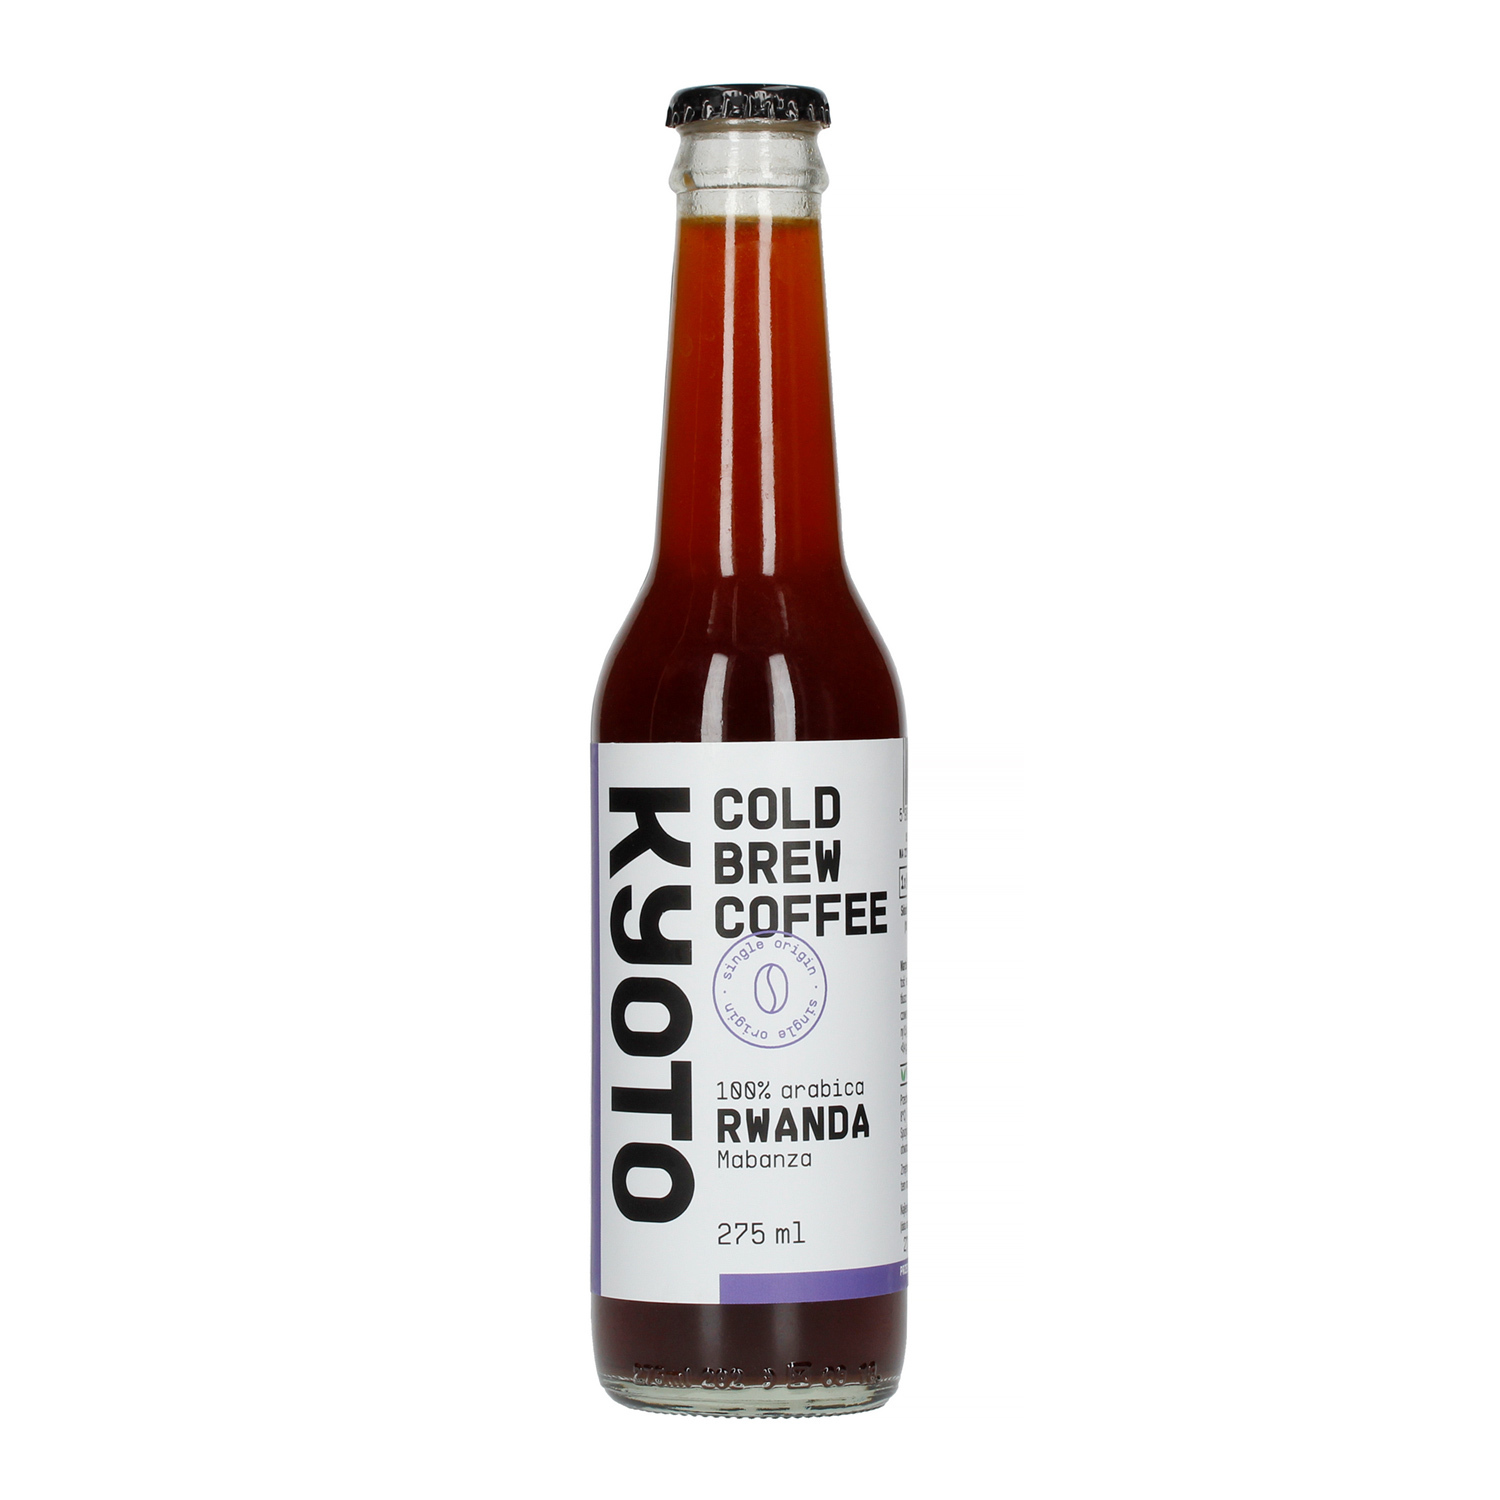 KYOTO - Cold Brew Coffee Rwanda 275ml